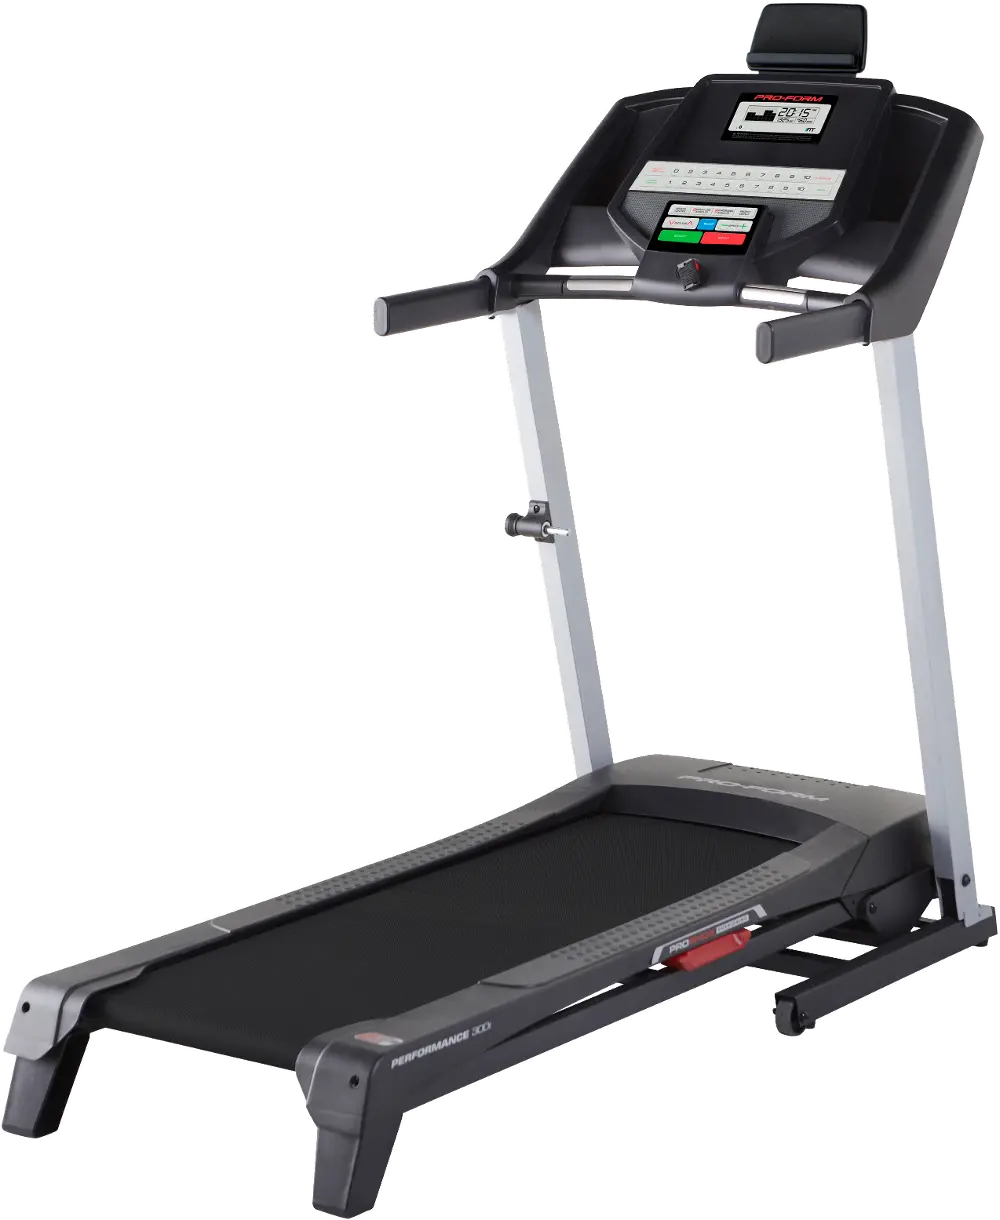 PFTL39715 ProForm Treadmill - Performance 300i-1